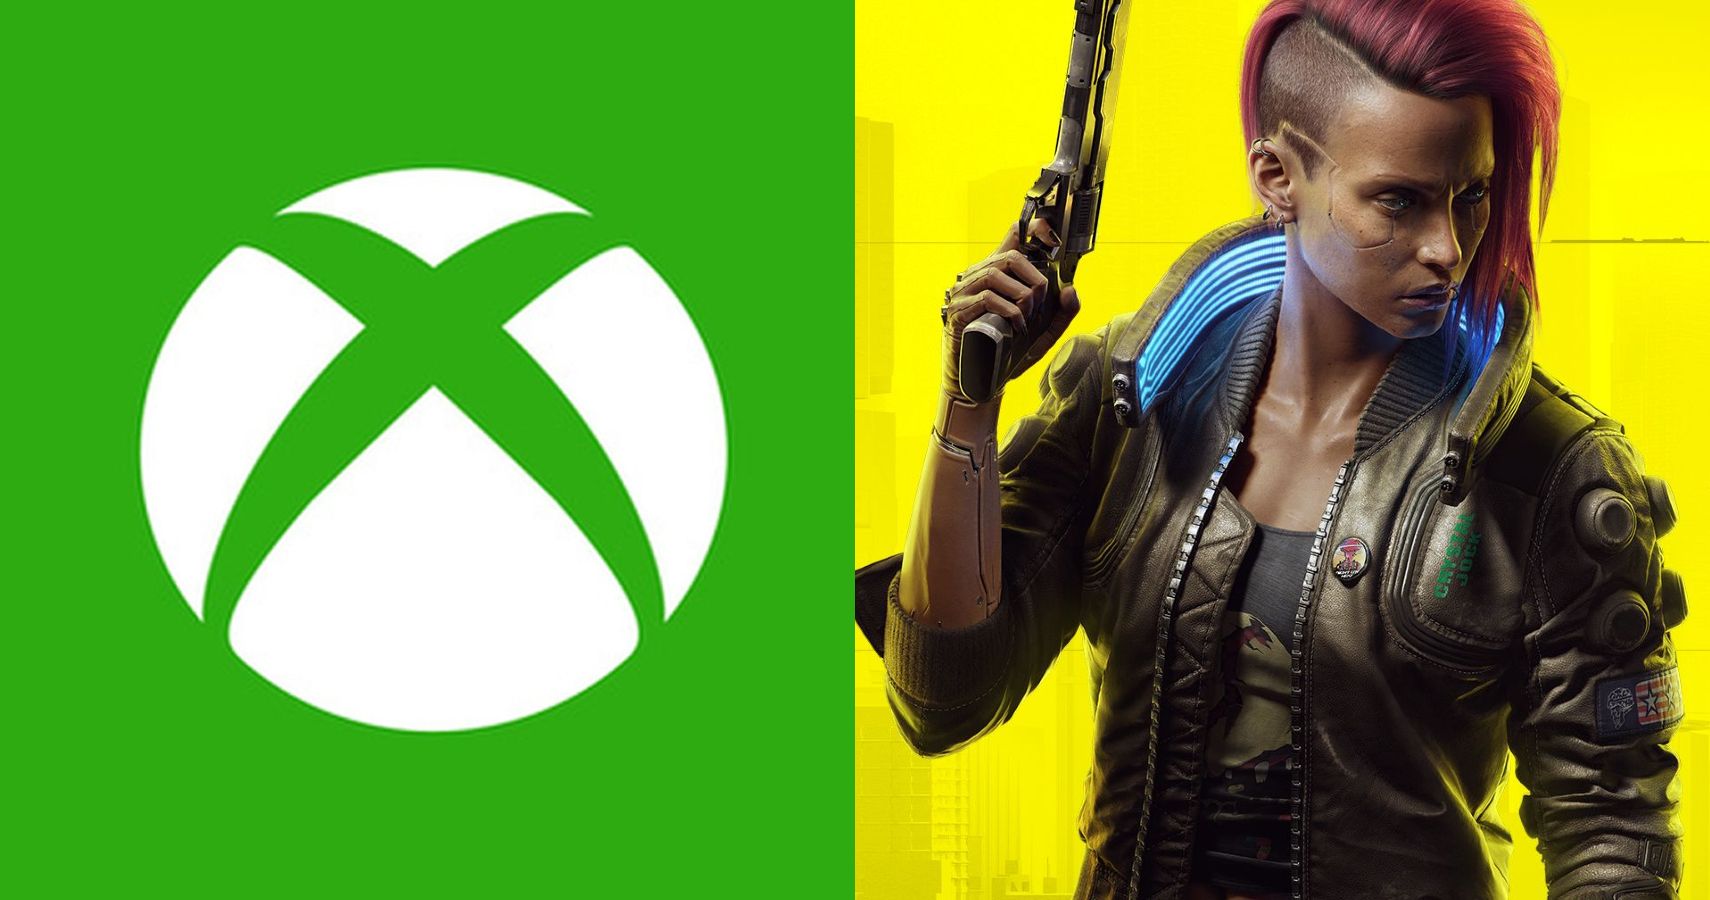 Cyberpunk character next to an Xbox logo